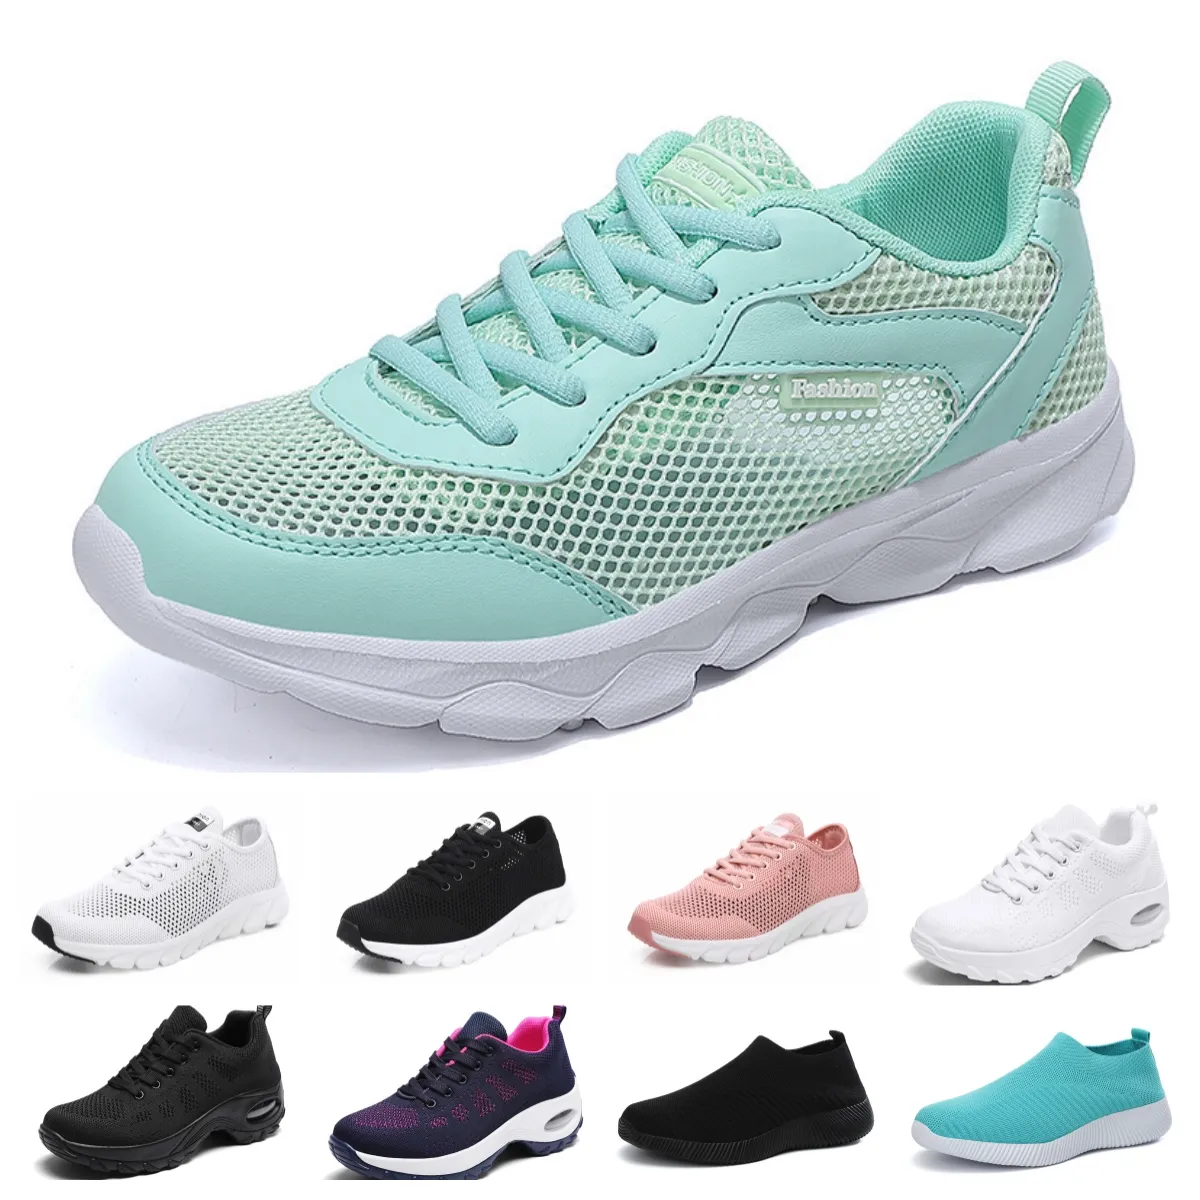 Donne spedite gratuite Donne da corsa Sneaker Hot Summer Jogging Pink Green Bianco Black Women Shoes Shoes EUR36-41